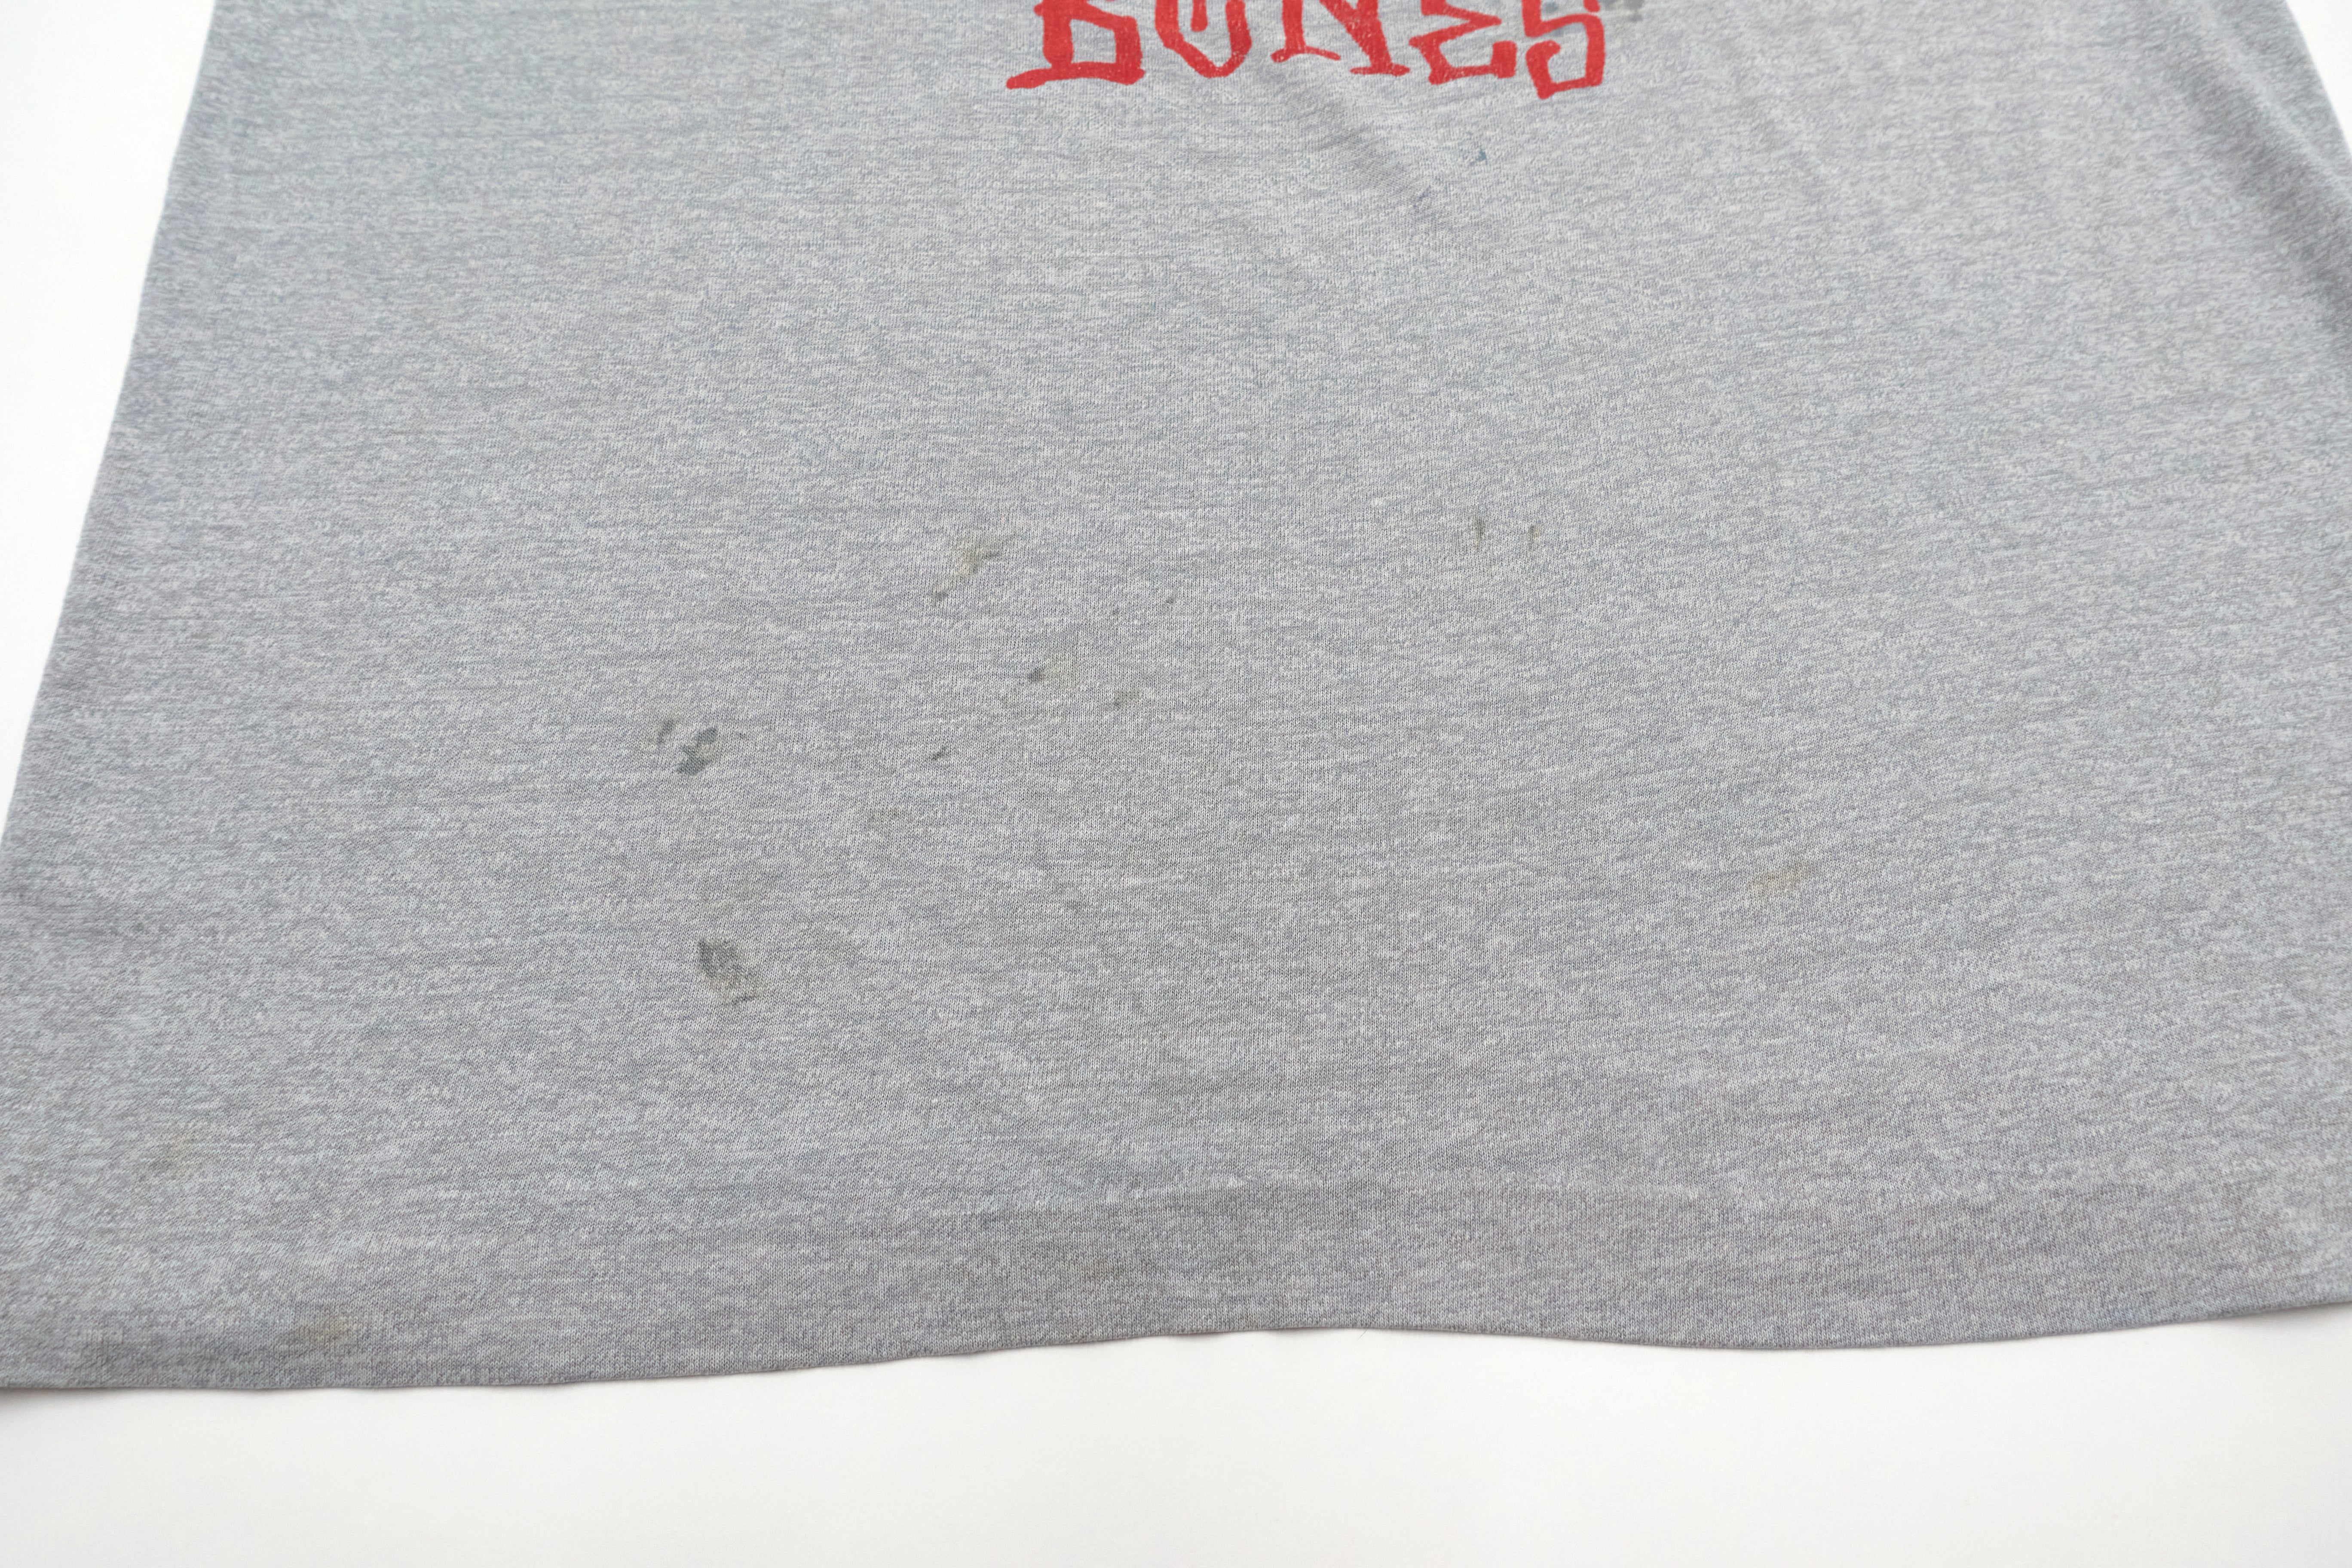 Powell Peralta Skateboards - Original Front Only Print Rat Bones by Craig Stecyk Shirt Size XL